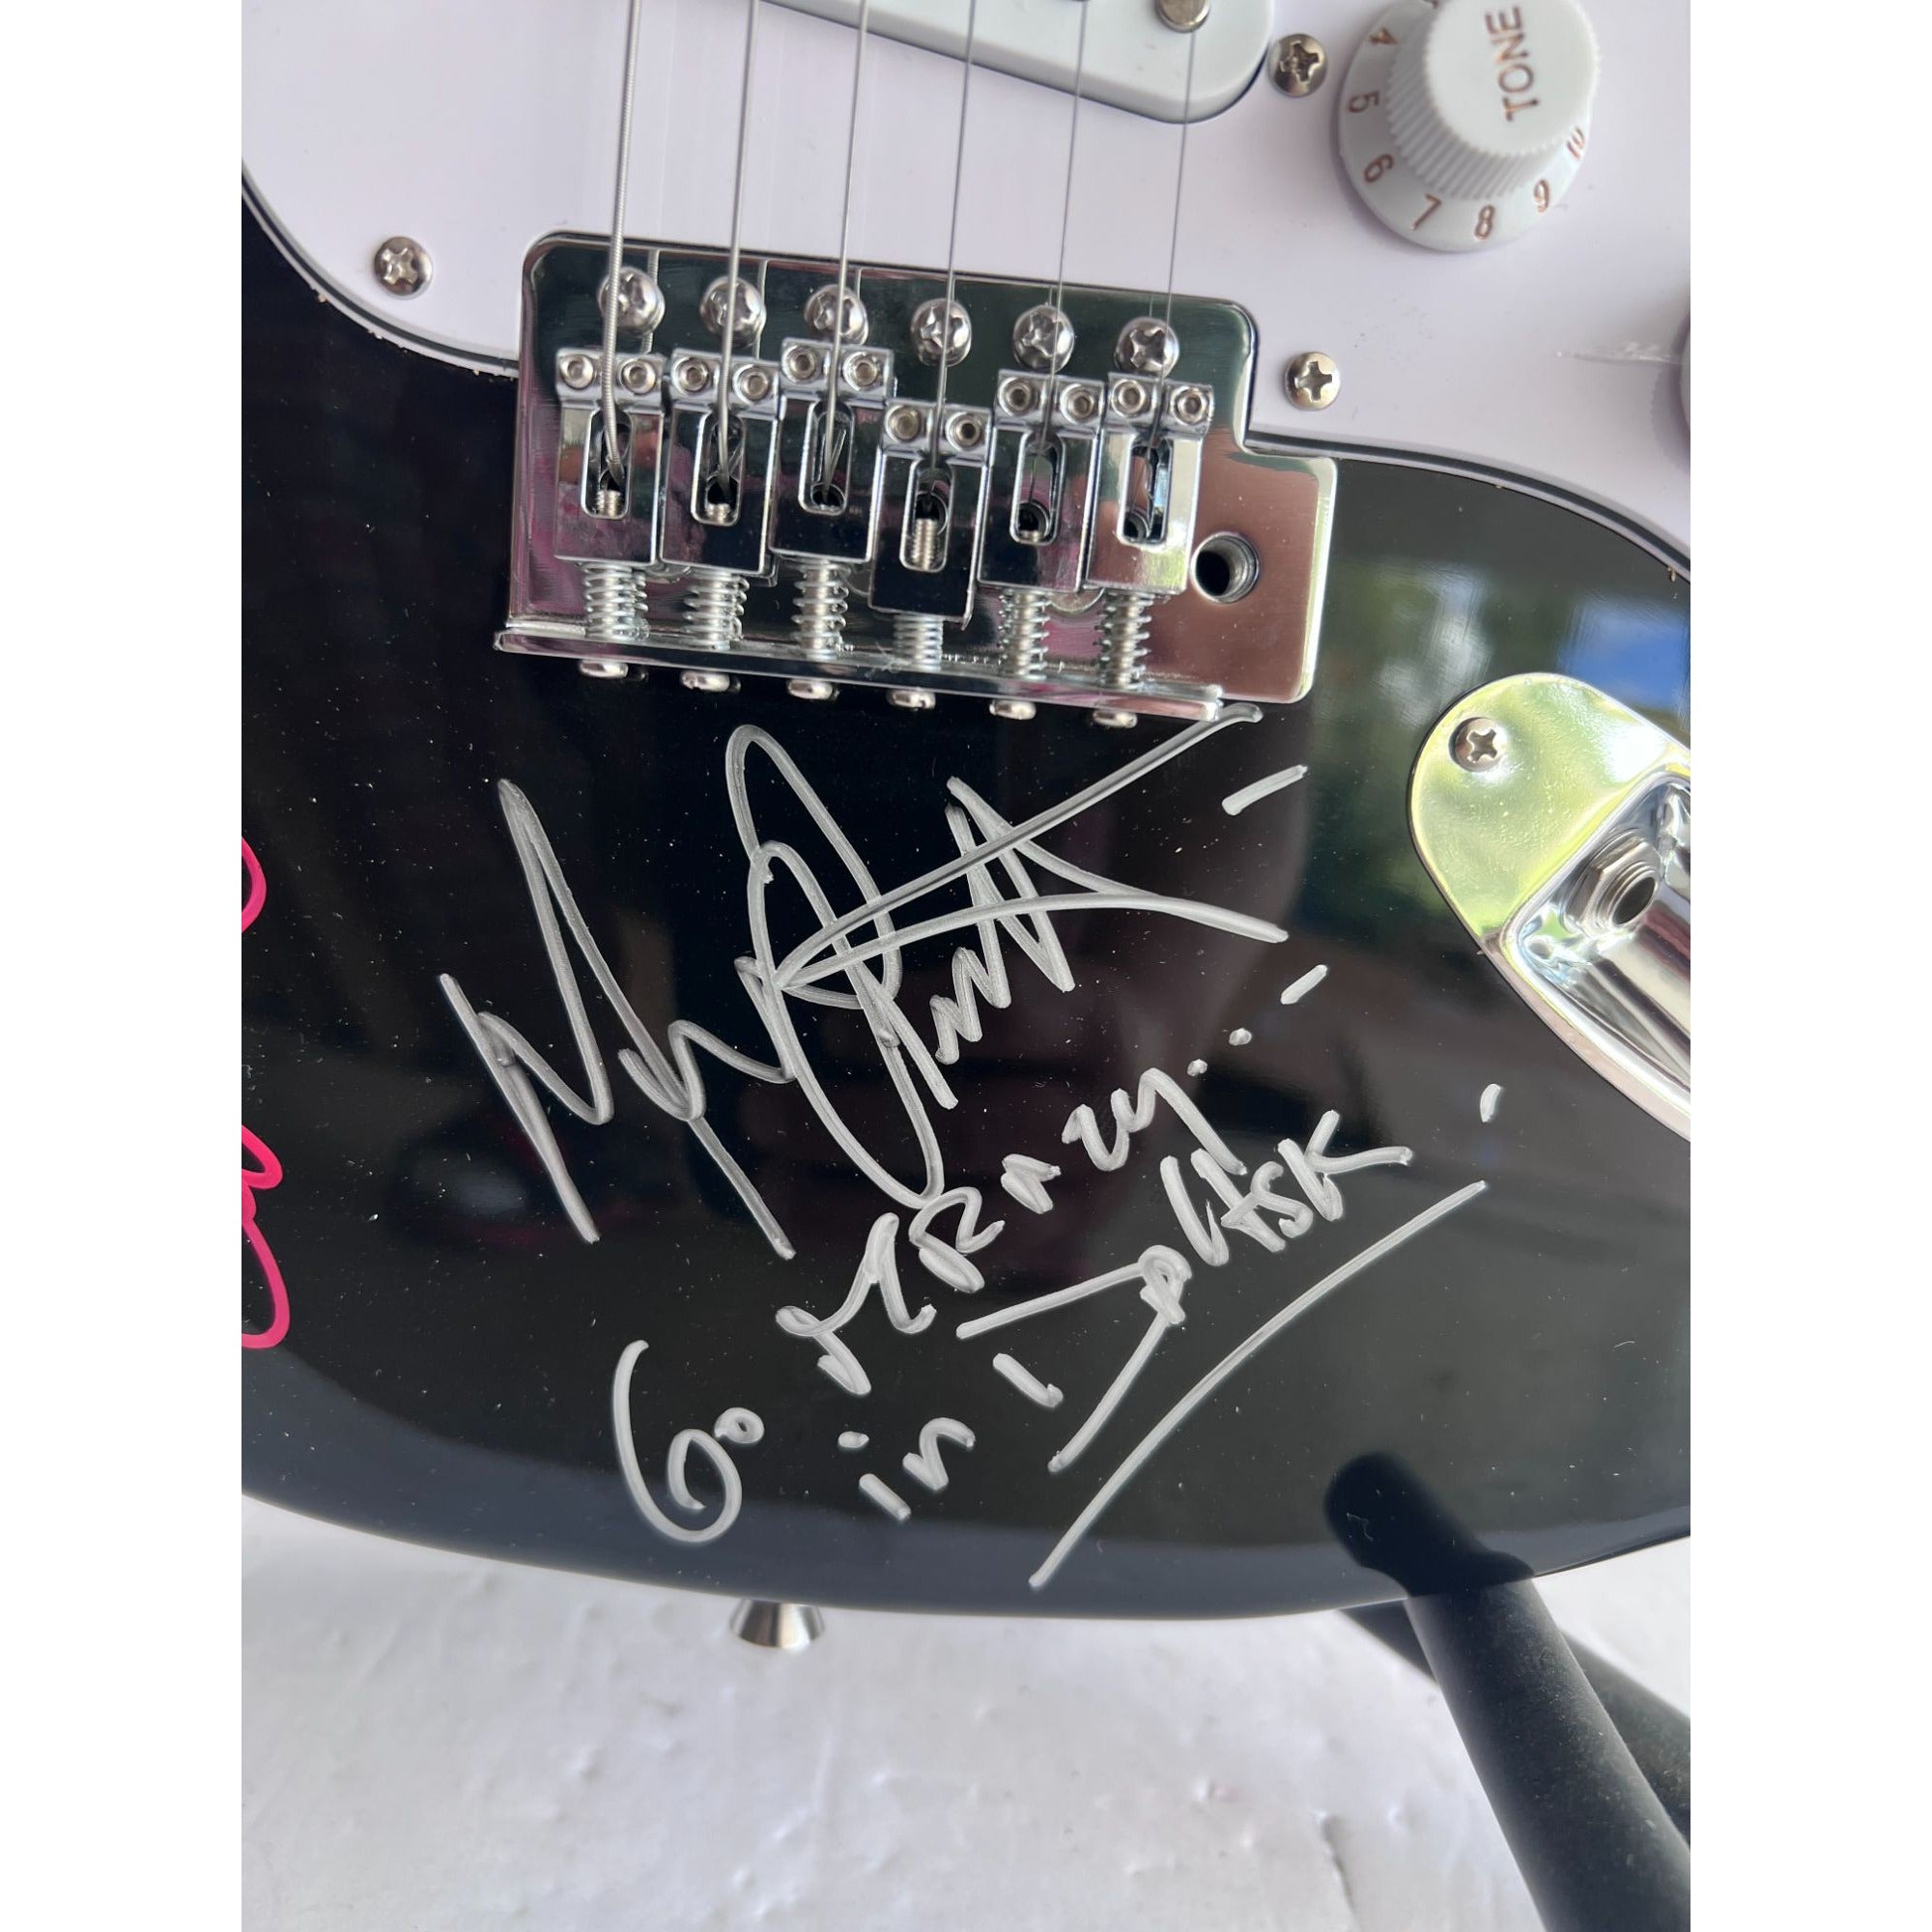 Eddie Van Halen David Lee Roth Sammy Hagar Michael Anthony Alex Van Halen Huntington Stratocaster full size electric guitar signed with proo